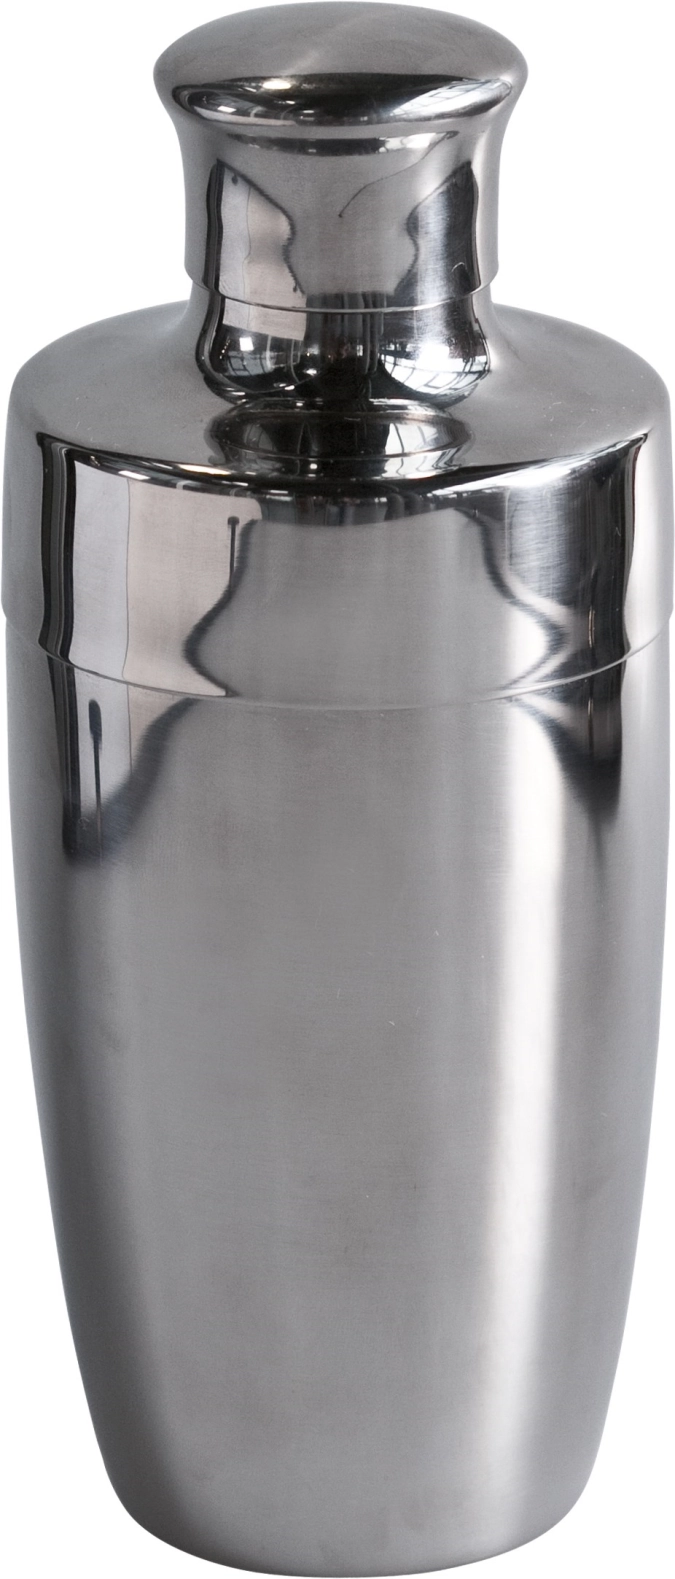 Cocktail Shaker 3tlg hochglanzpoliert 0.75lt